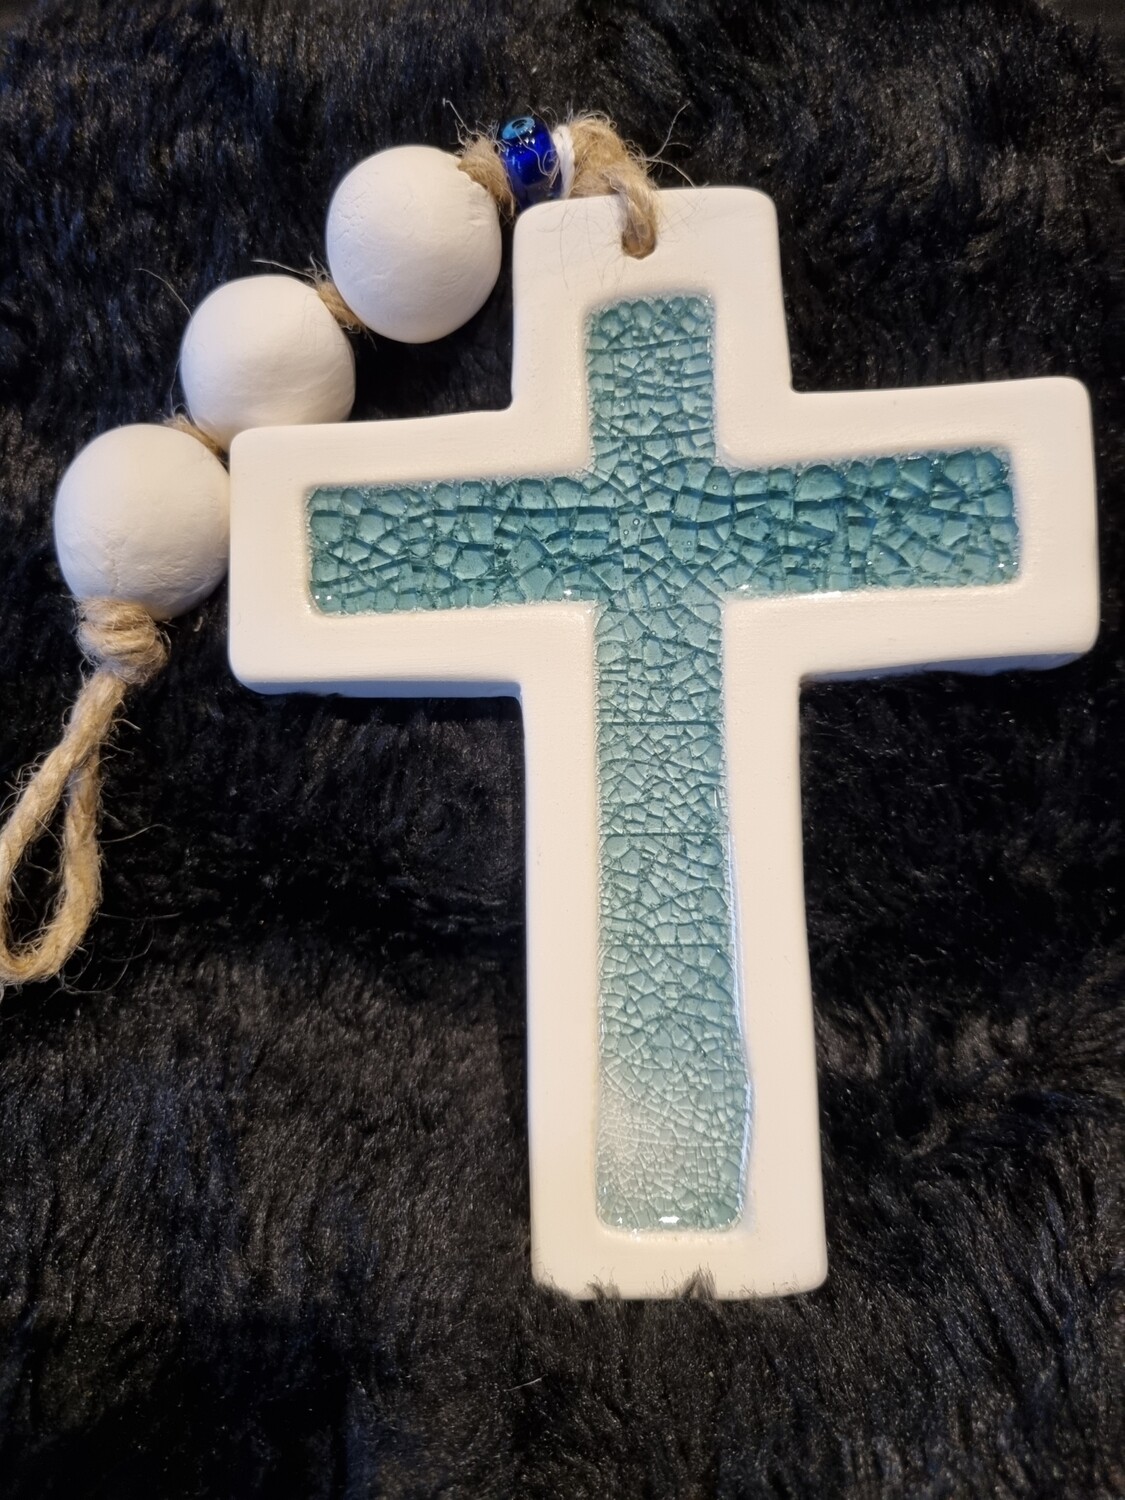 Ceramic cross with Tourmaline cross insert